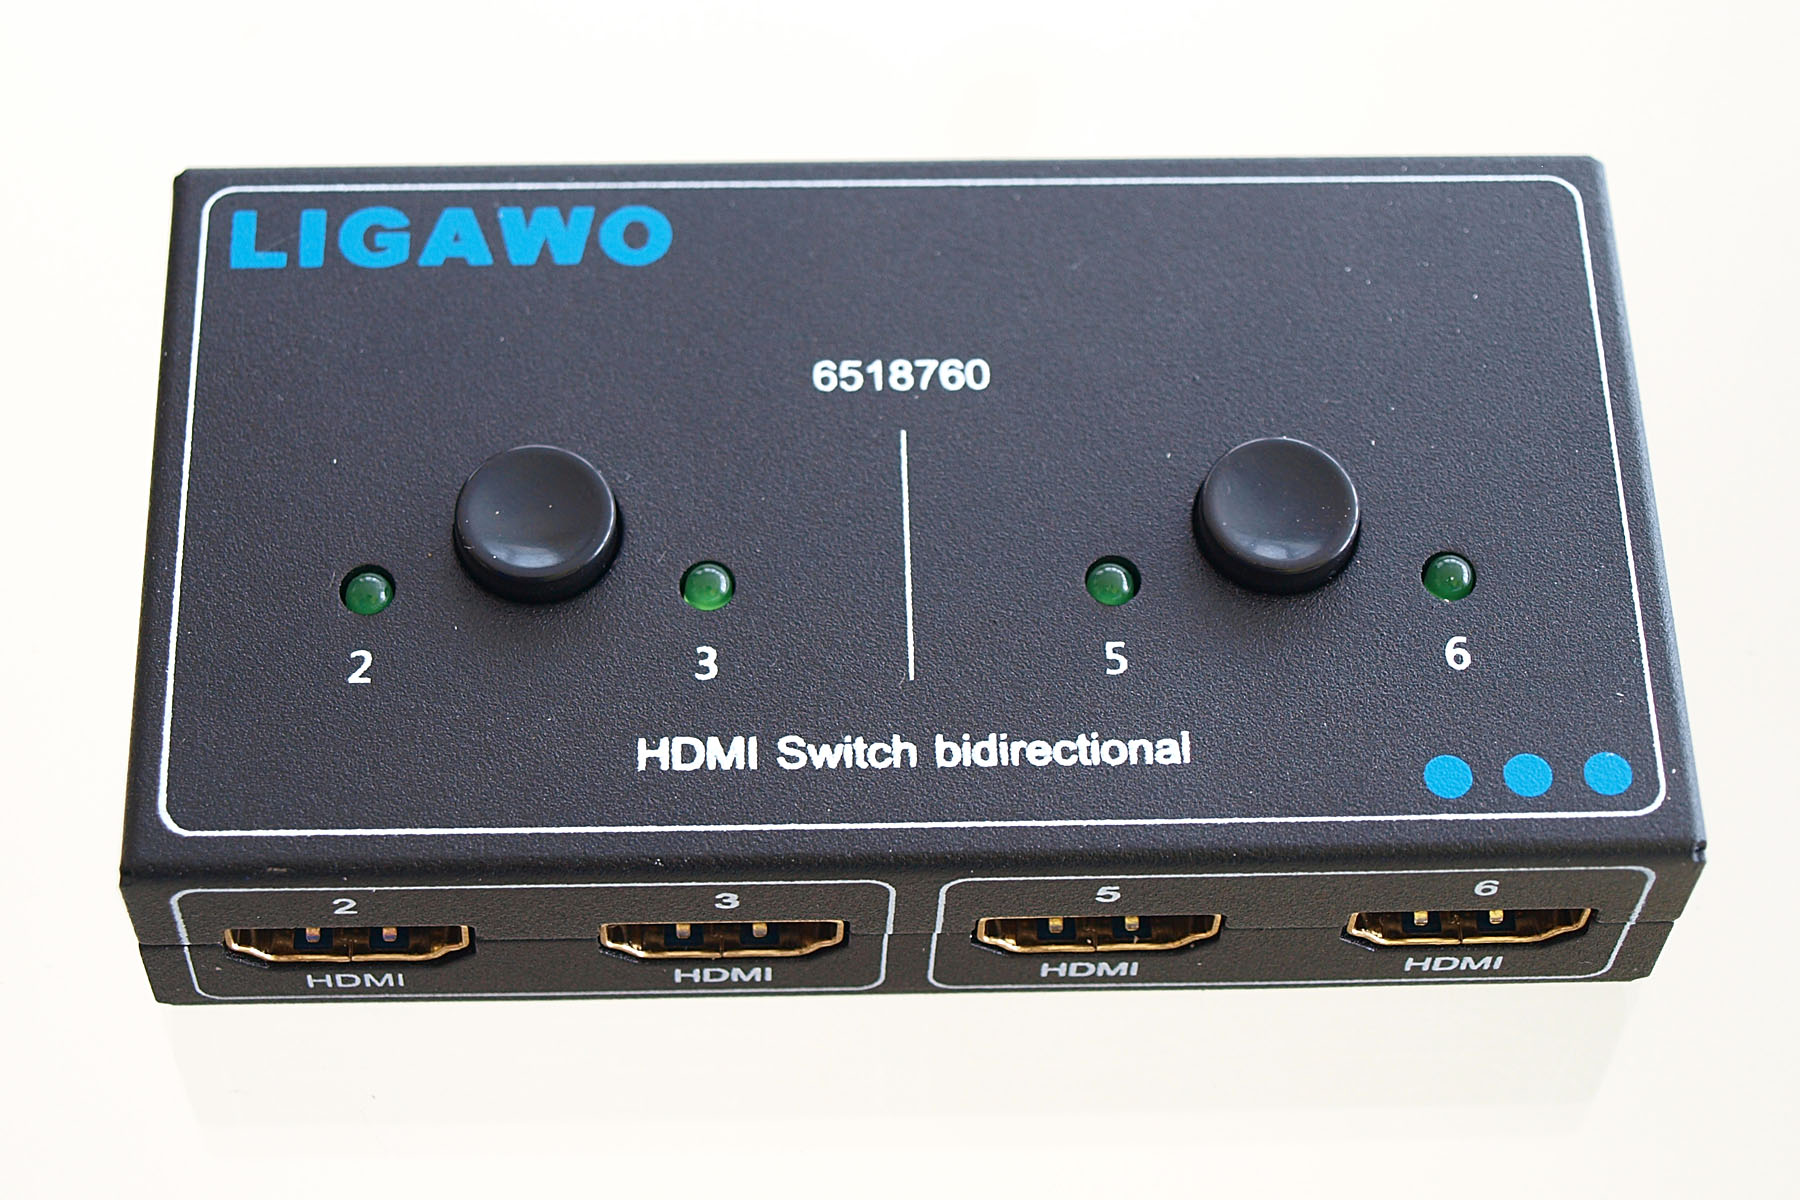 Ligawo 6518760 HDMI Switch